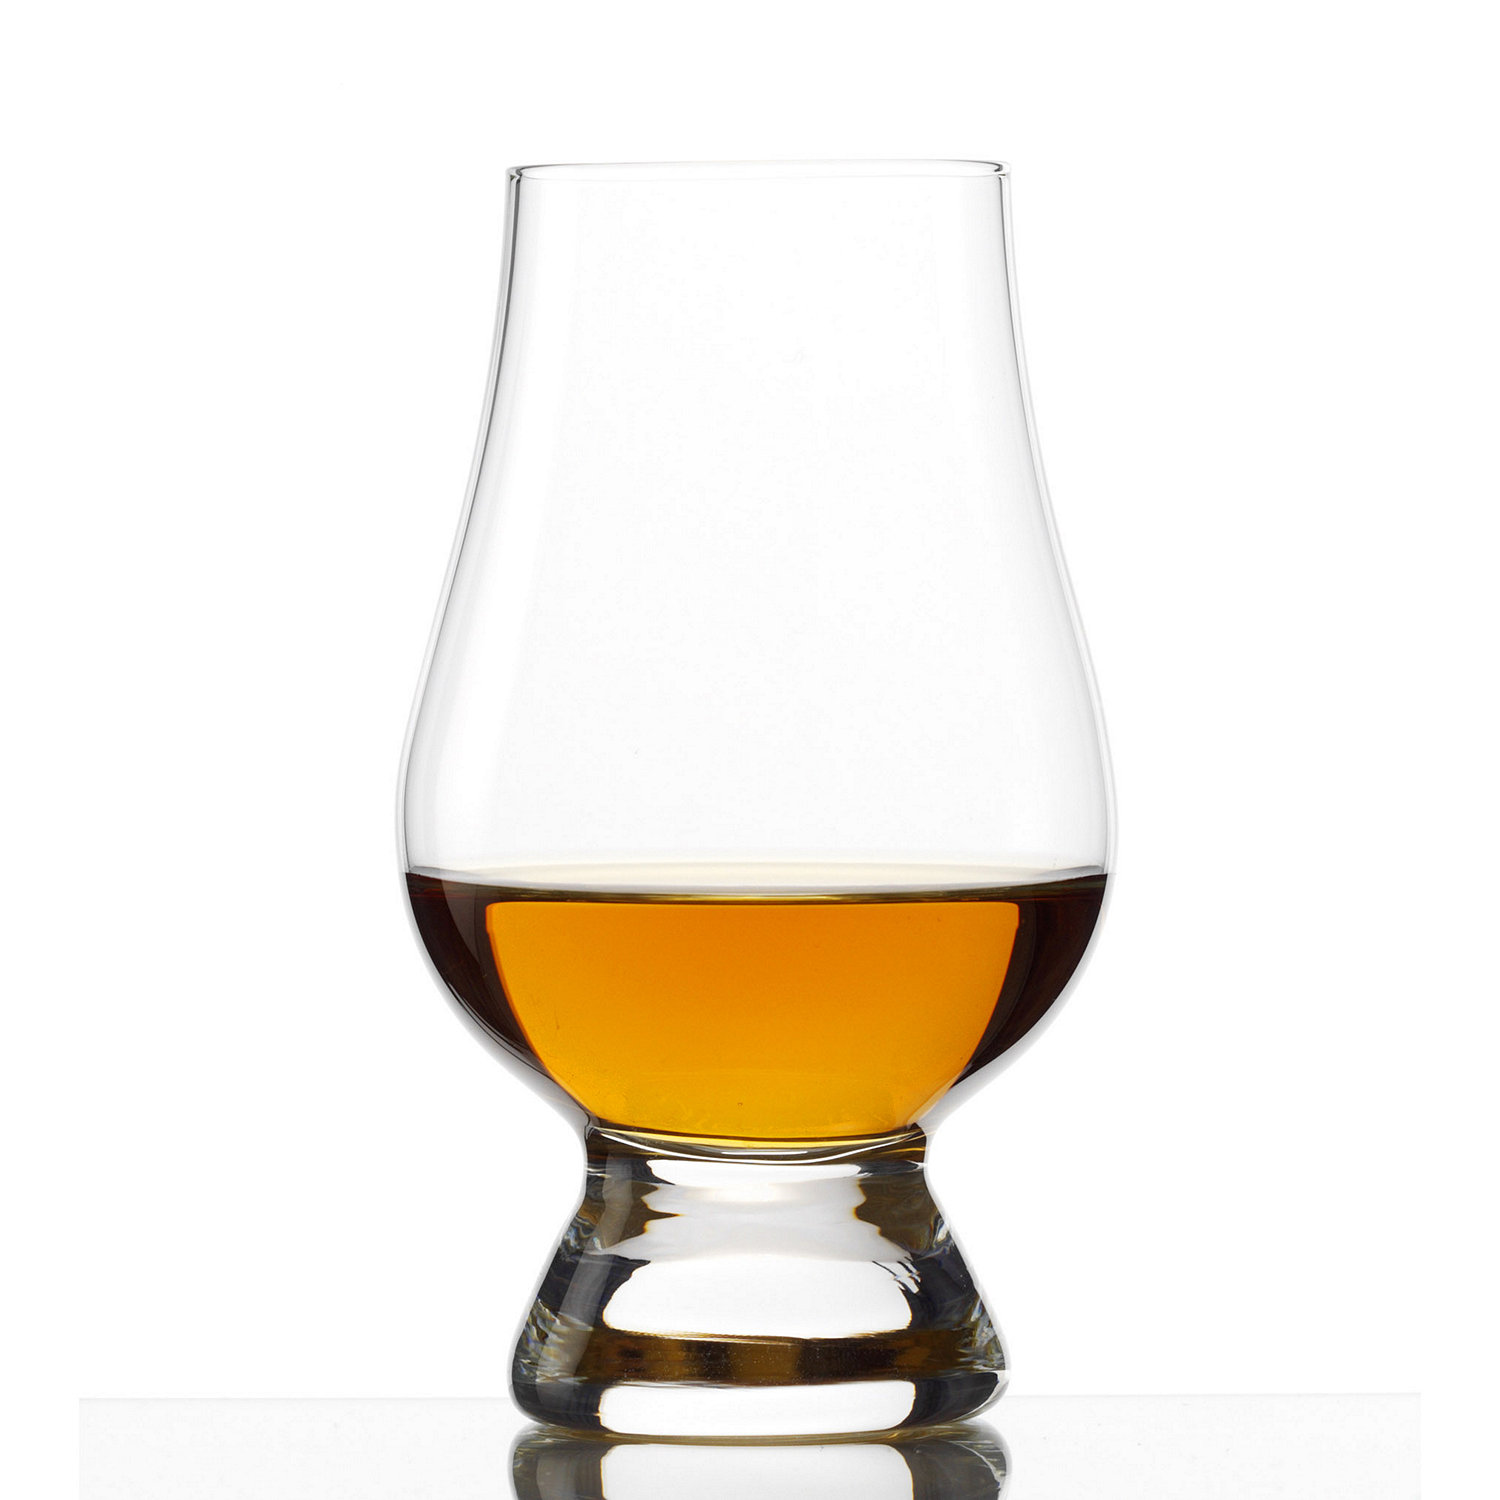 Image result for whisky glass